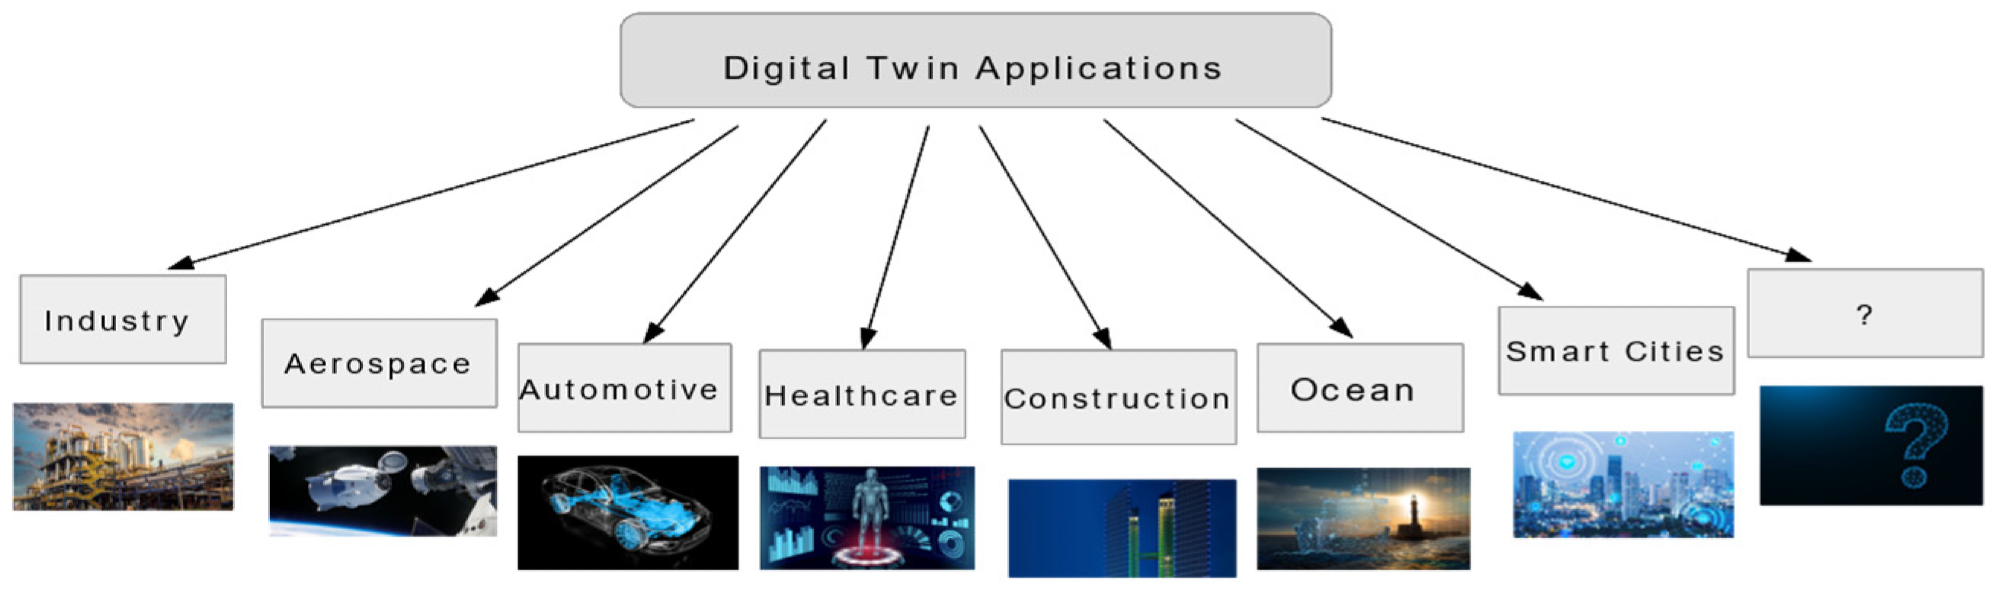 Digital Twin applications map.